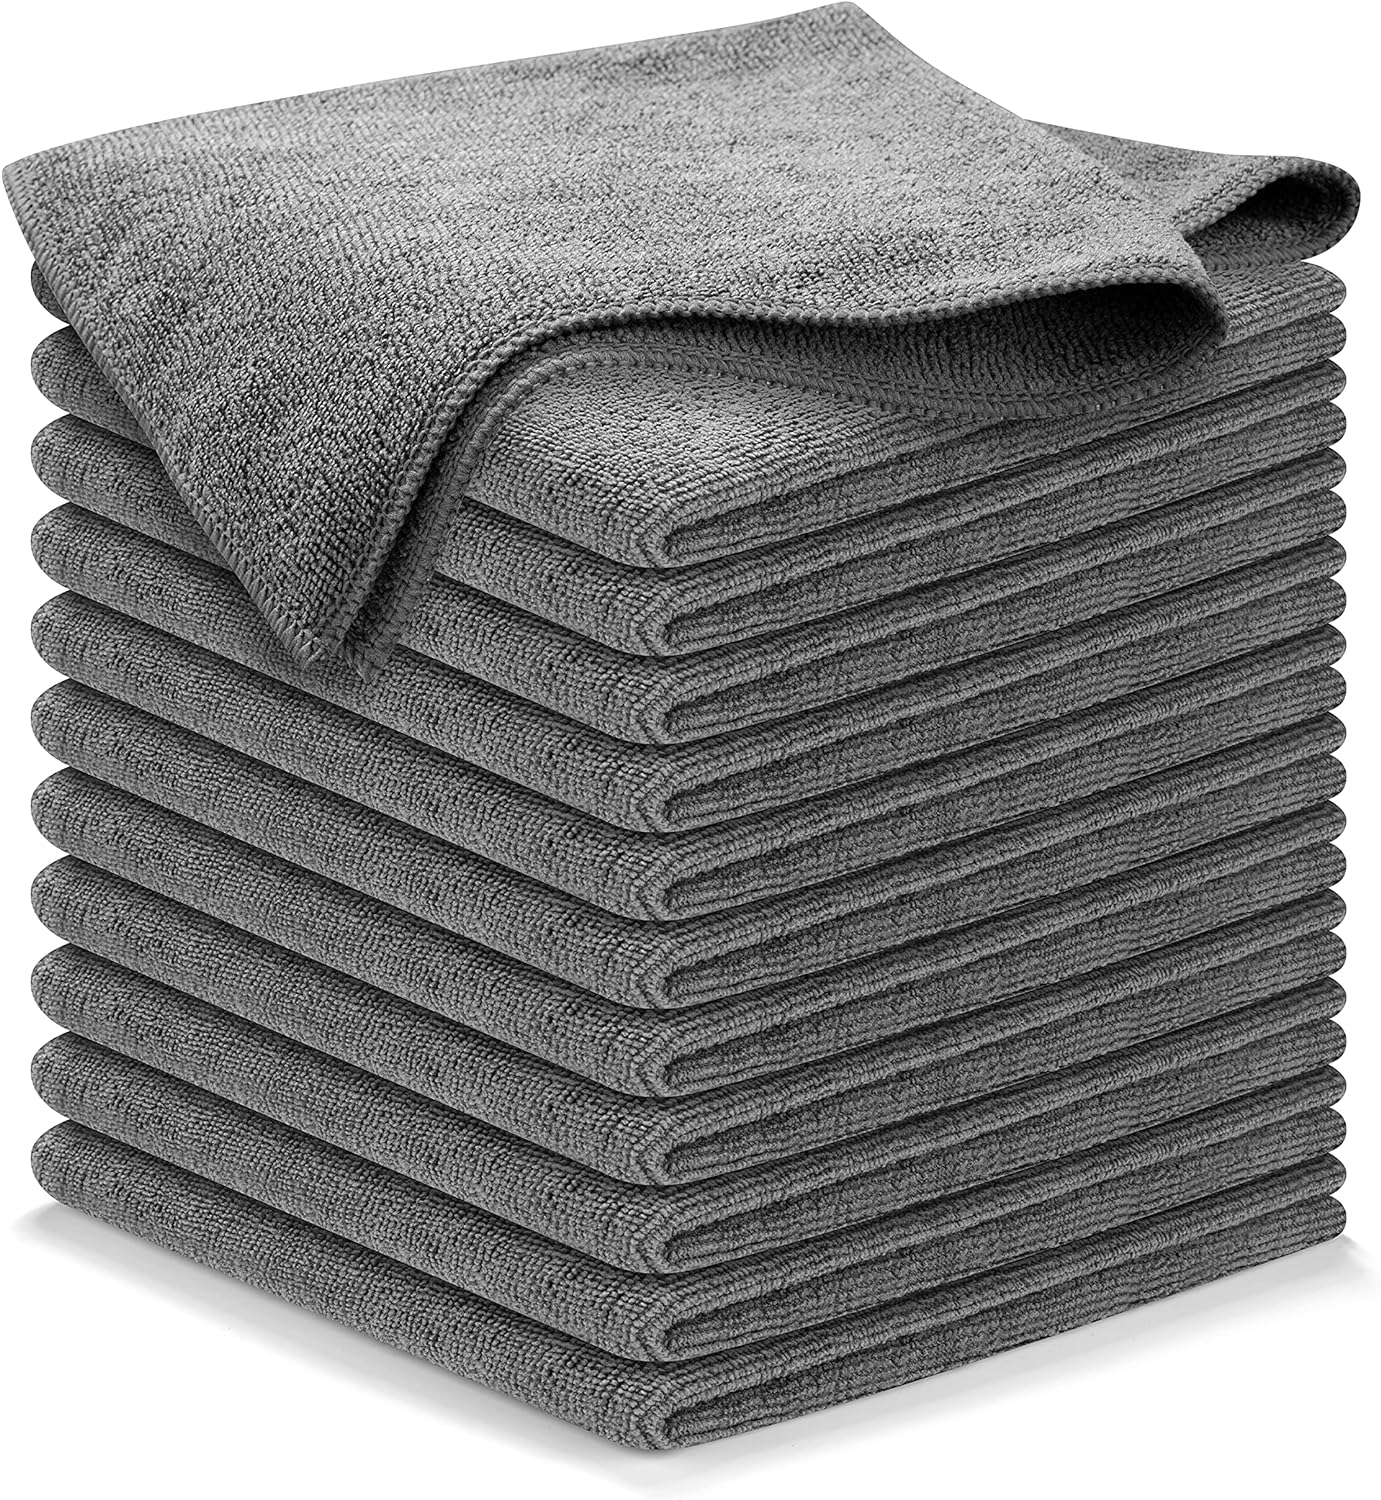 USANOOKS Microfiber Cleaning Cloth Grey - 12 Packs